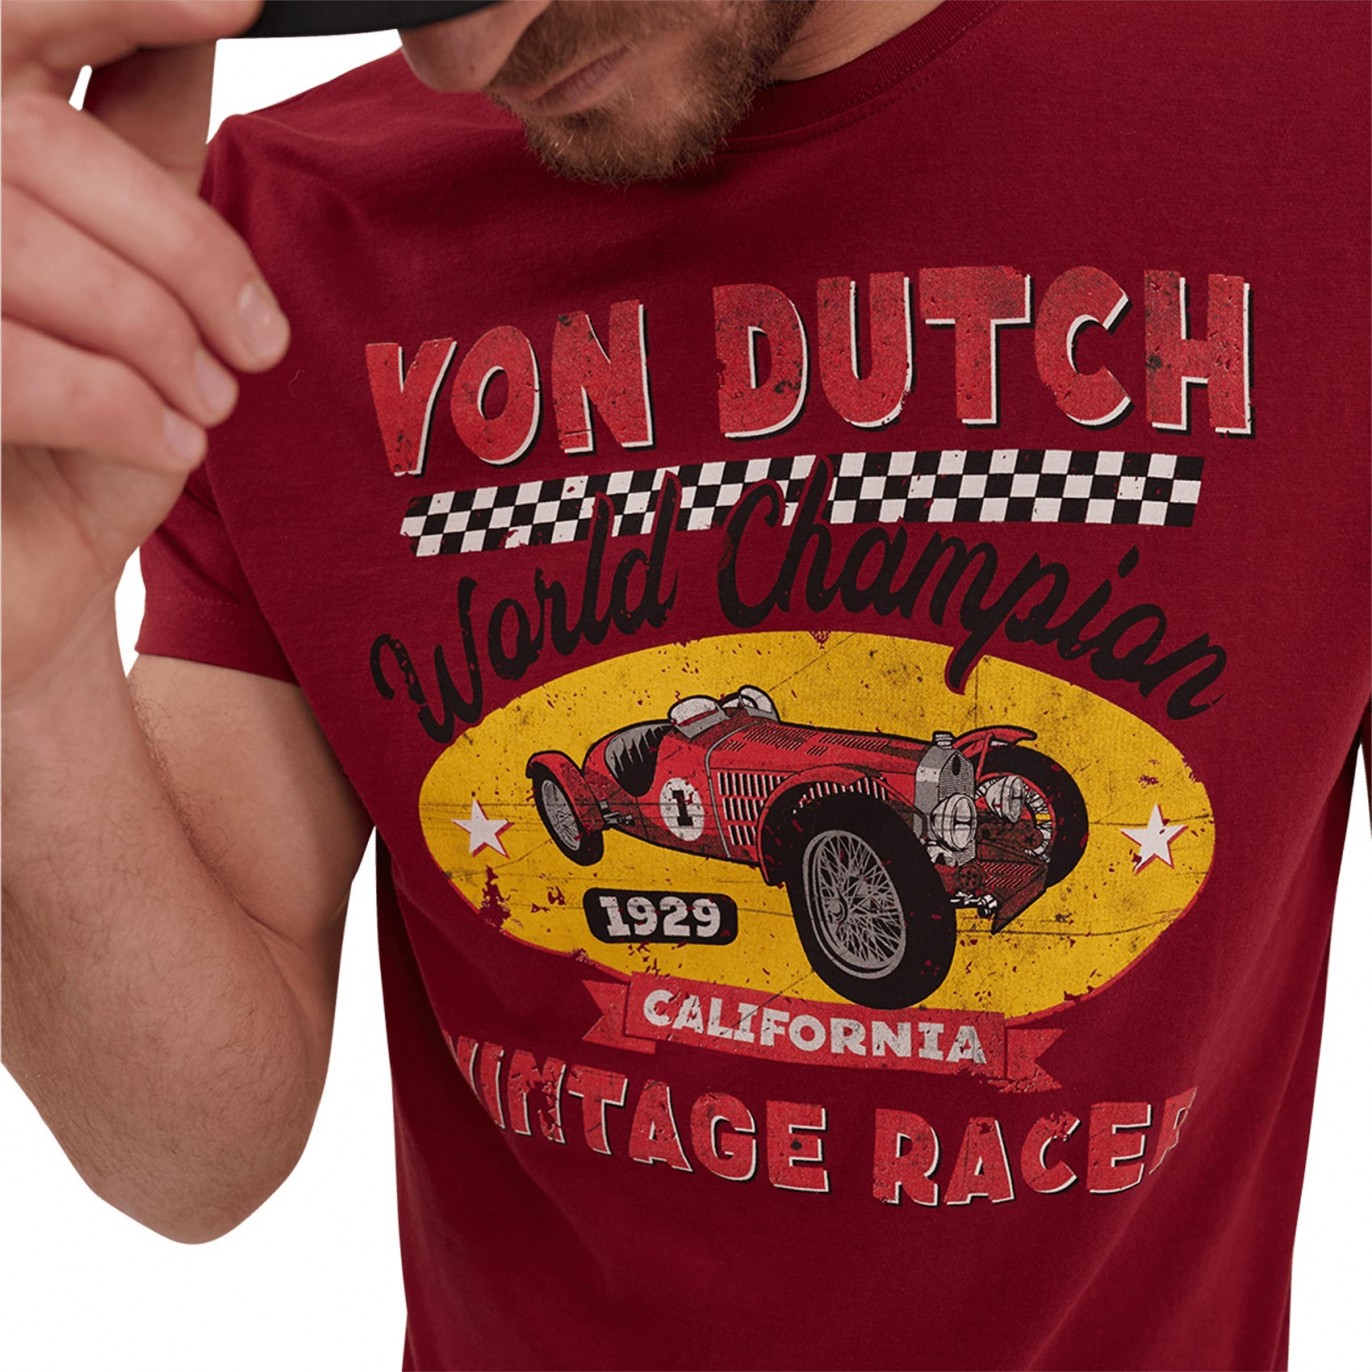 T-shirt homme coton Front - Von Dutch